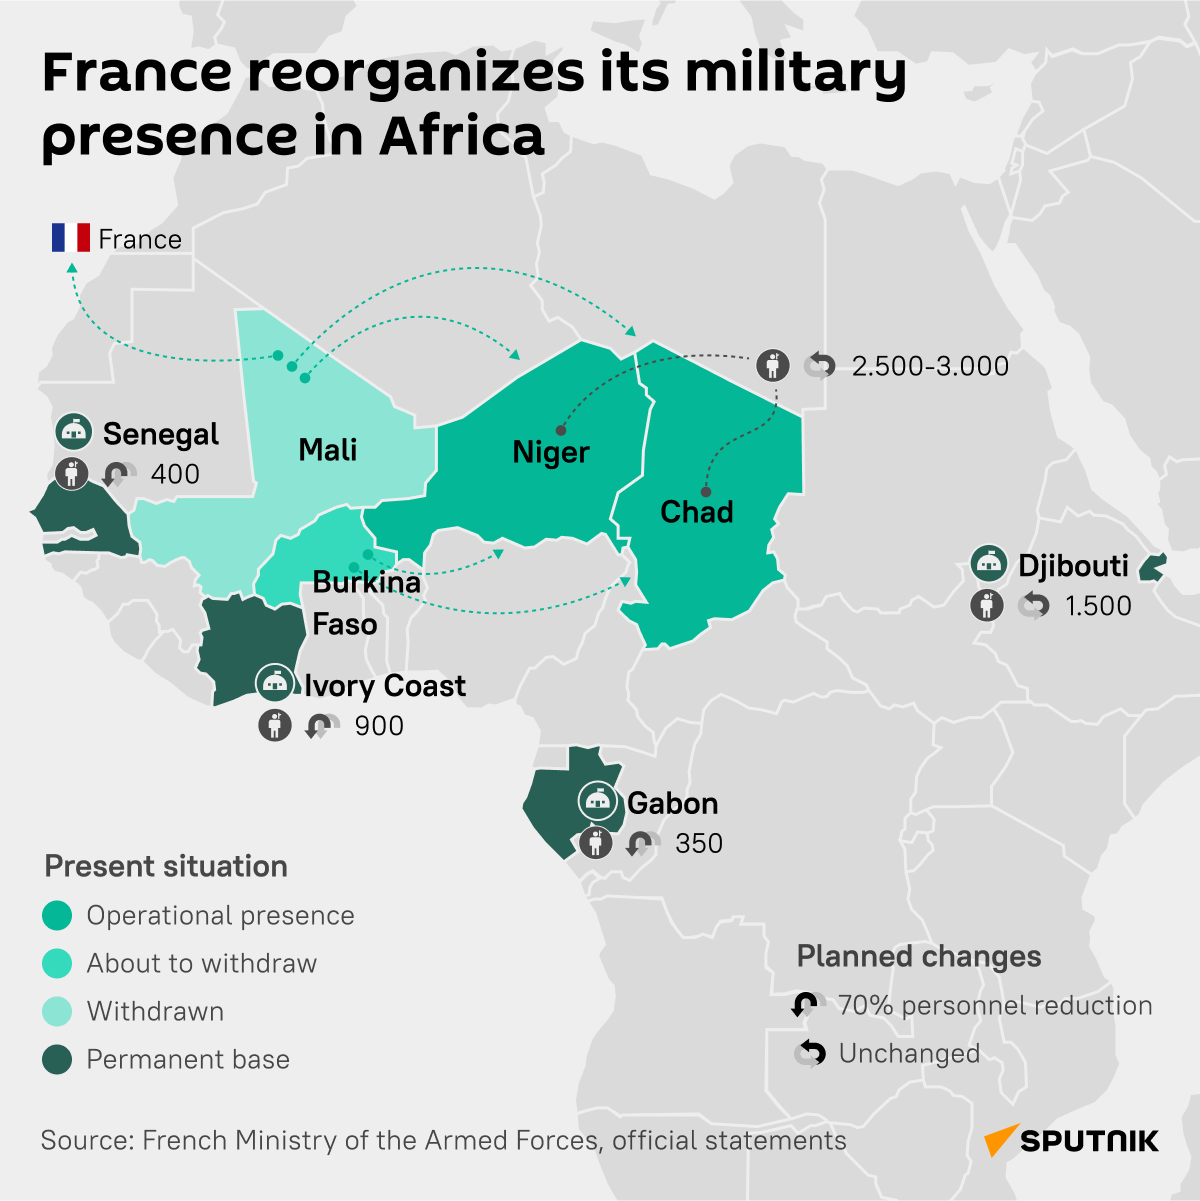 French military presence in Africa - Sputnik International